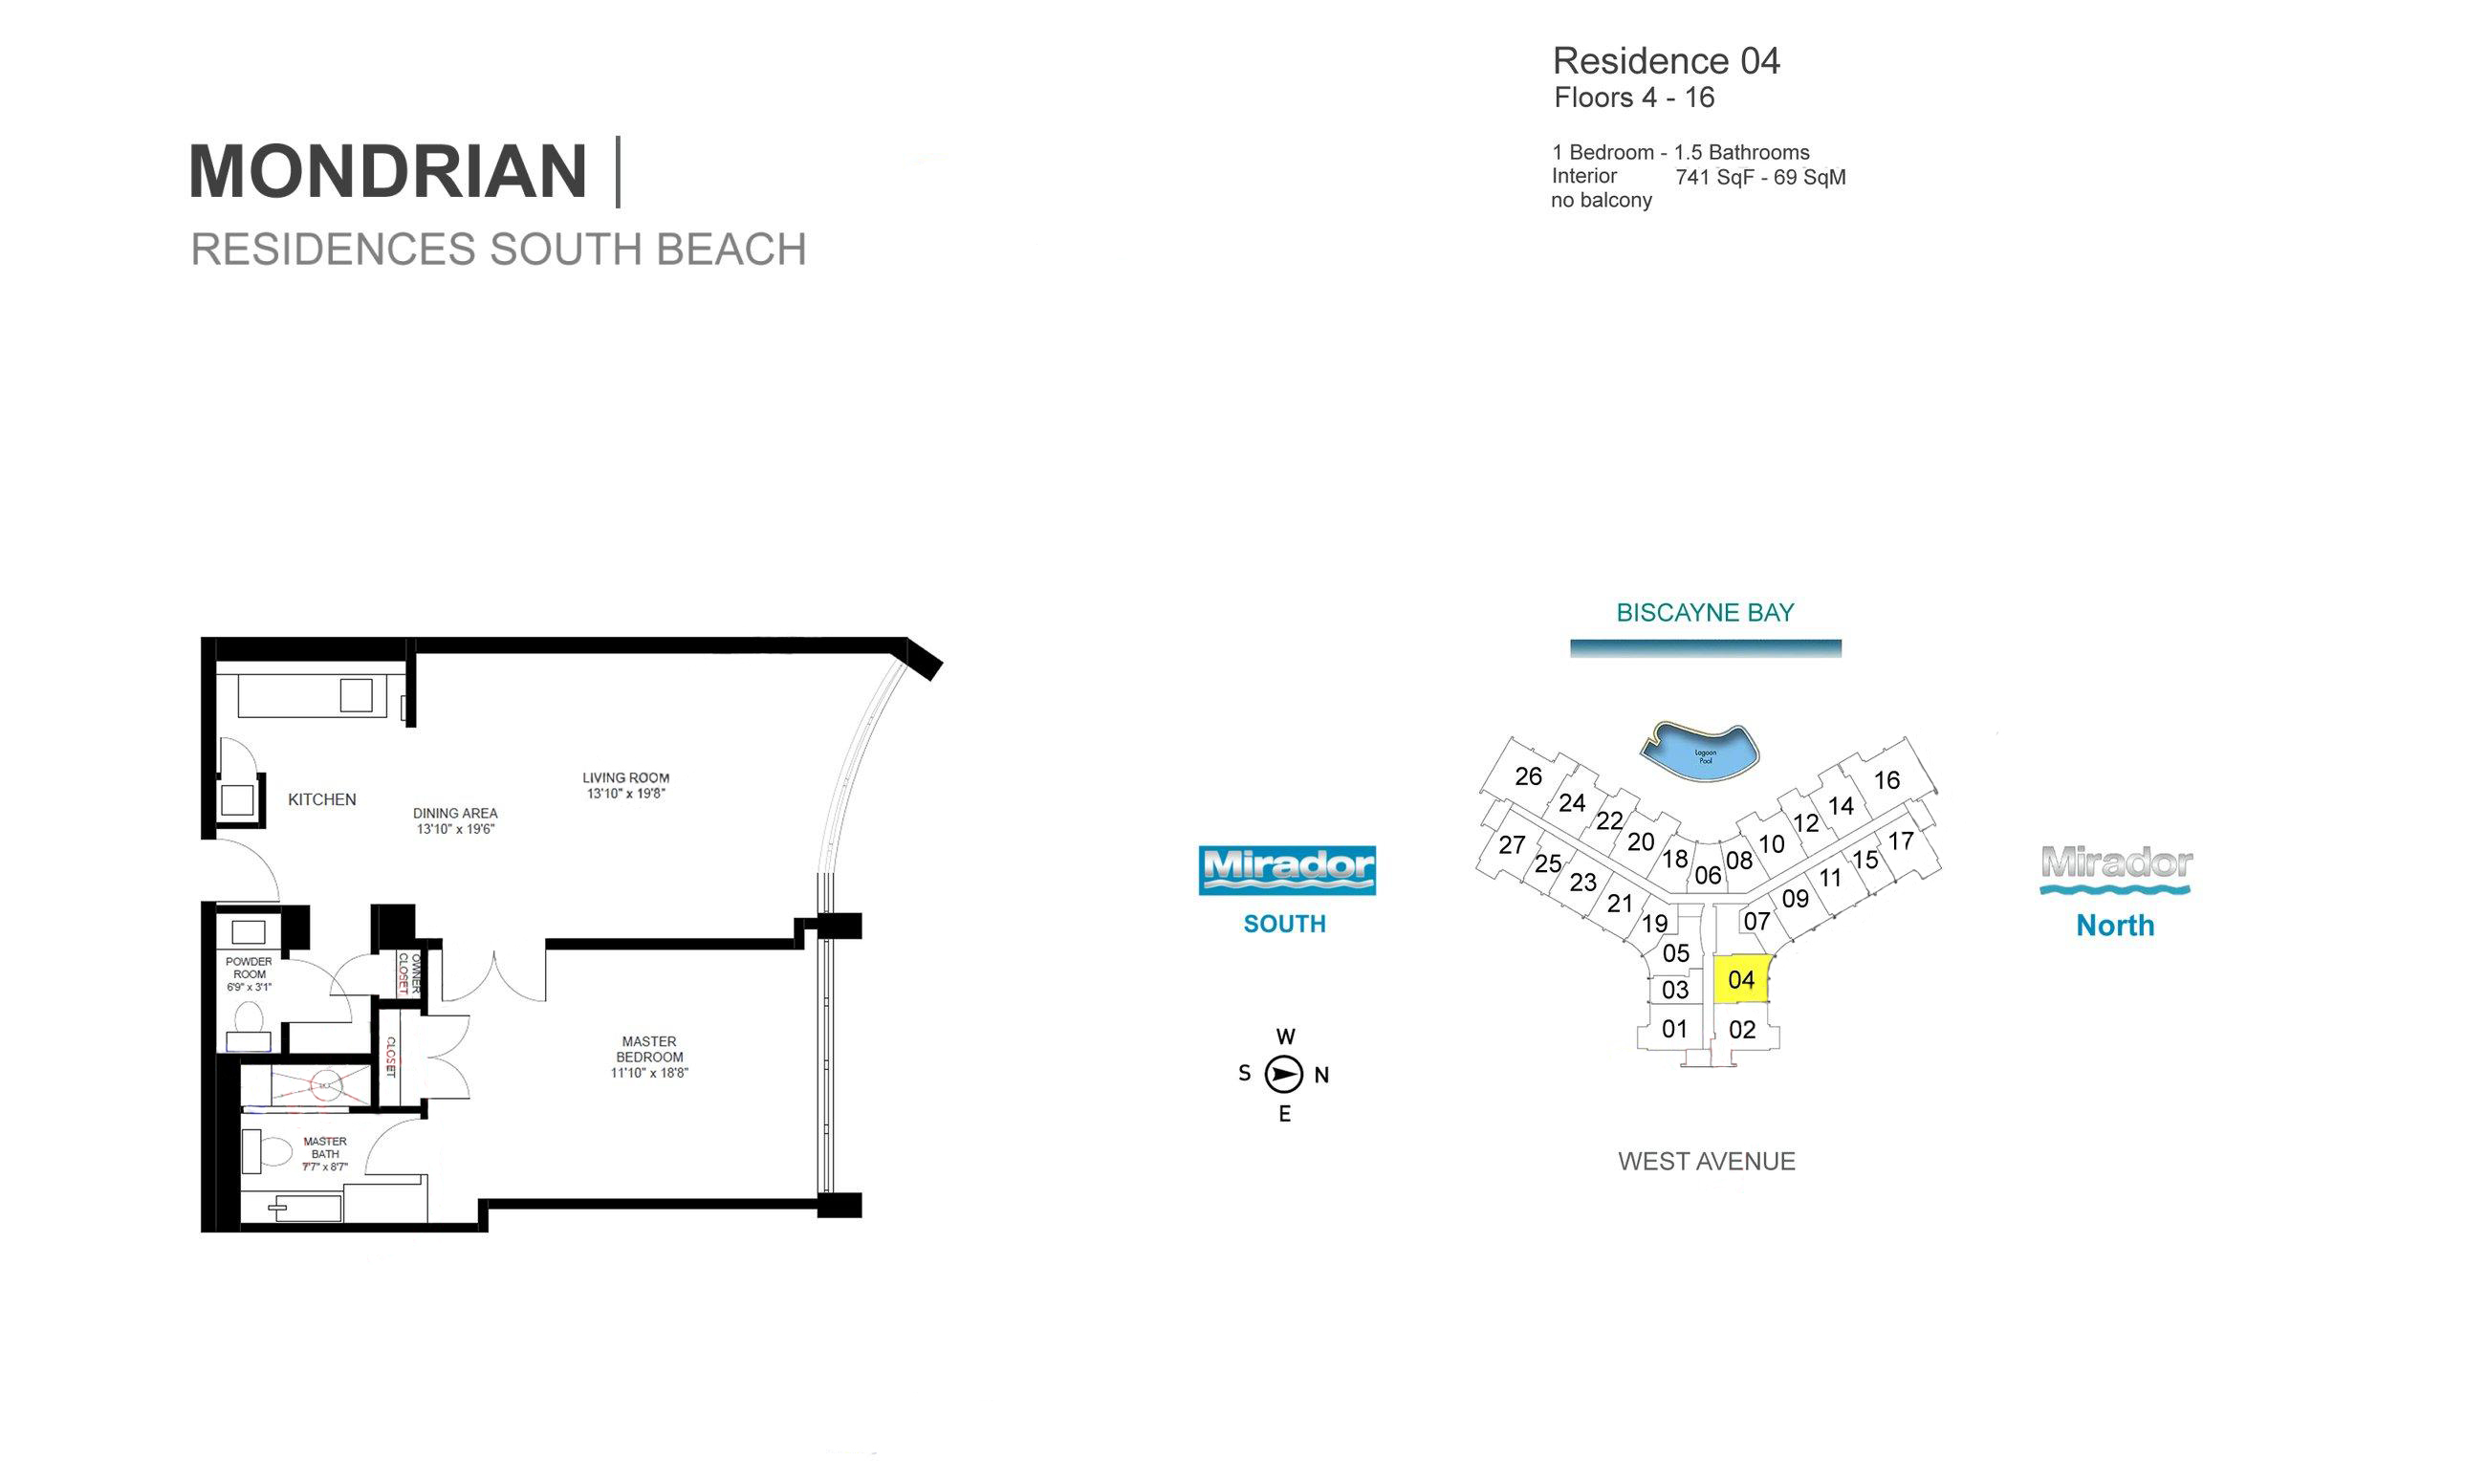 Mondrian South Beach Residence 04